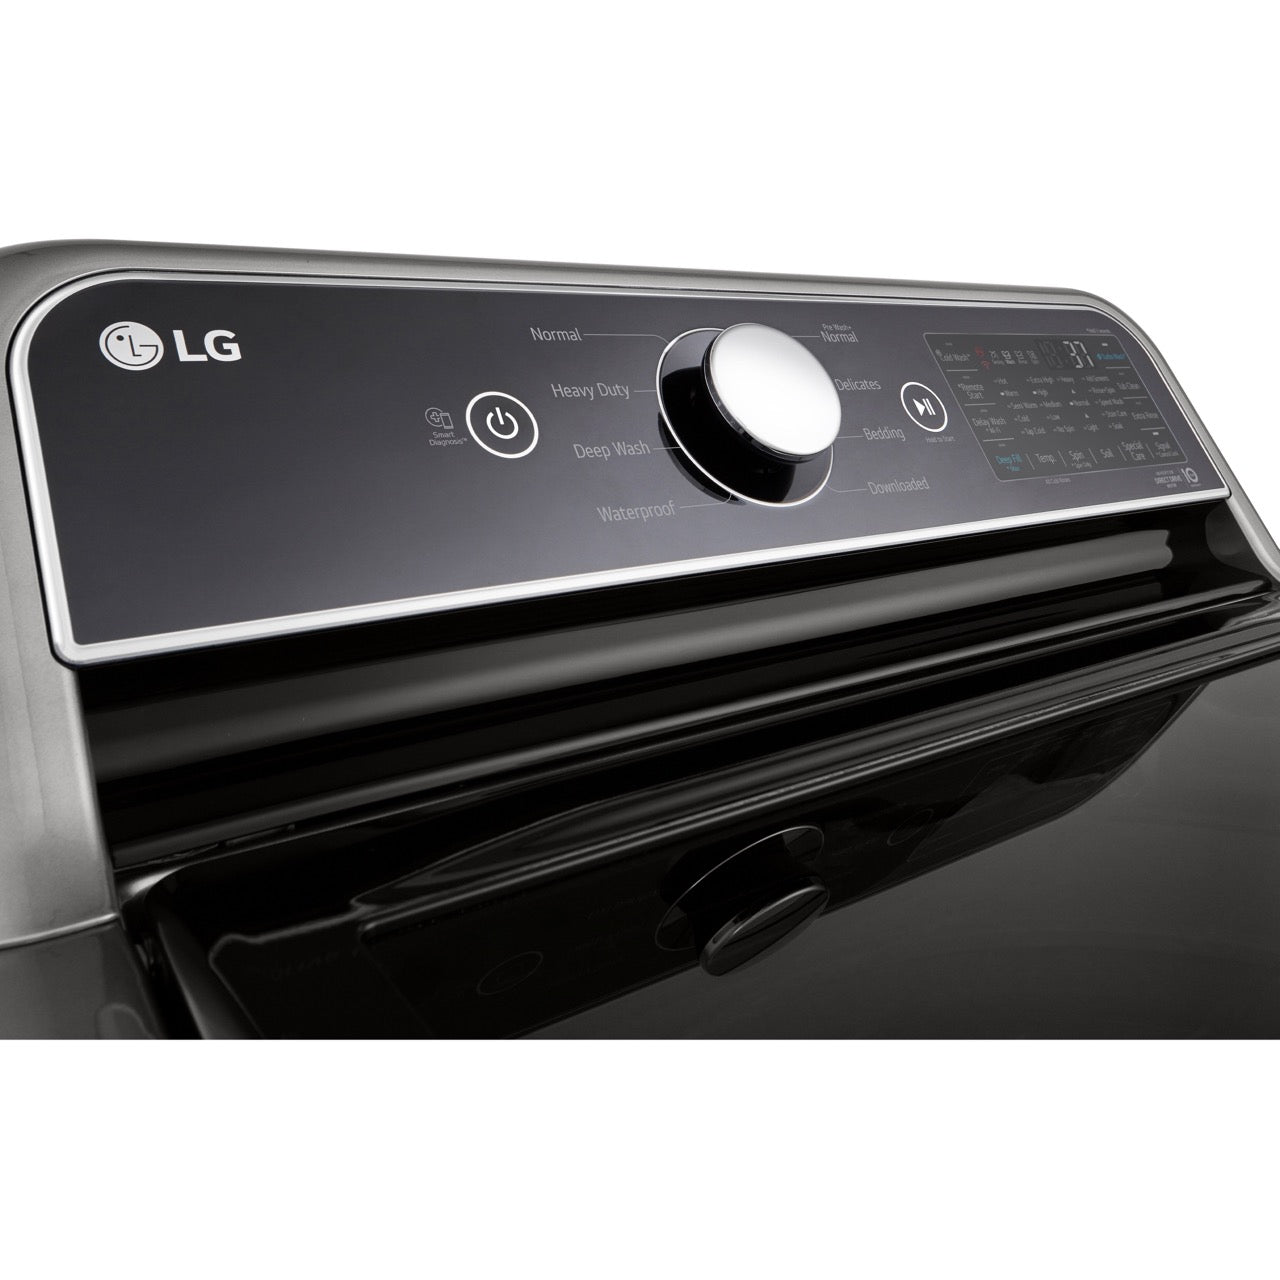 LG 5.3-Cu.Ft. Mega Capacity Smart wi-fi Enabled Top Load Washer with 4-Way Agitator and TurboWash3D Technology (WT7405CV)